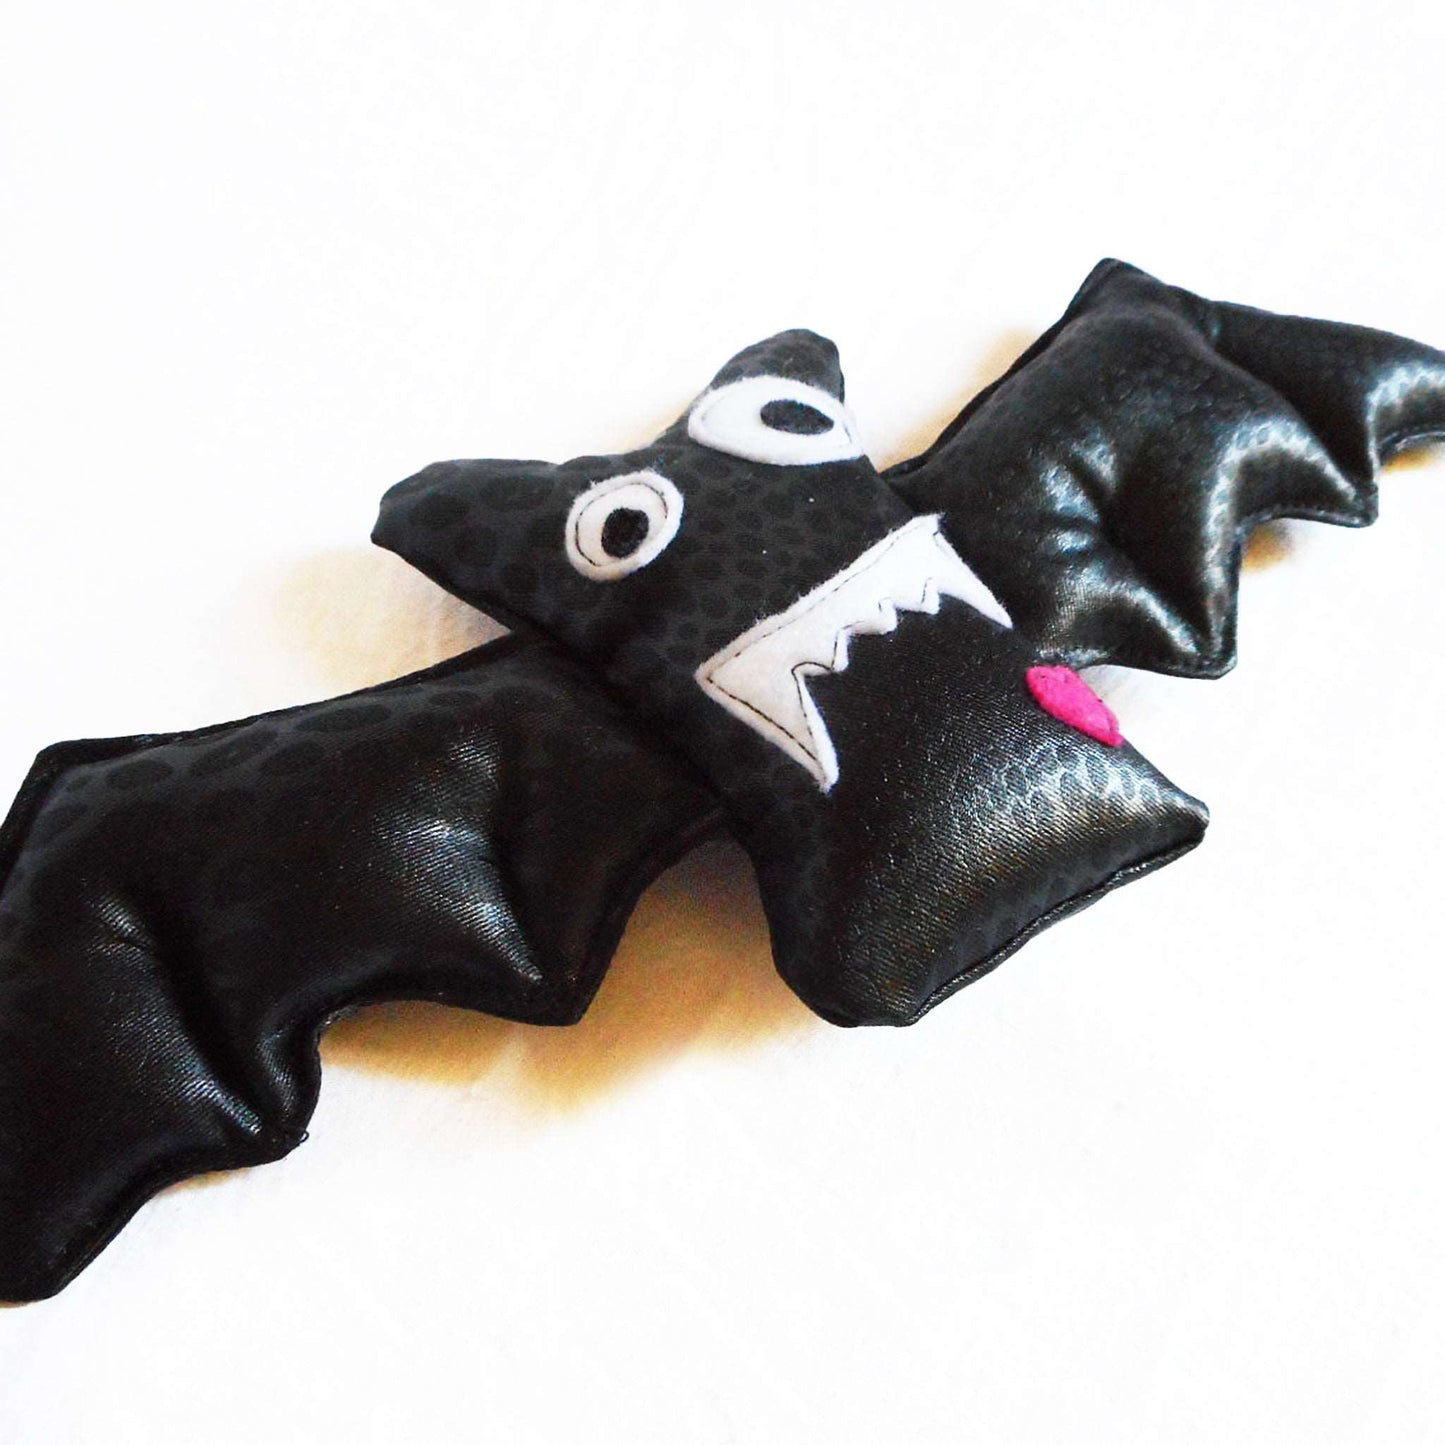 Plüsch-Fledermaus aus schwarzem Kunstleder.  